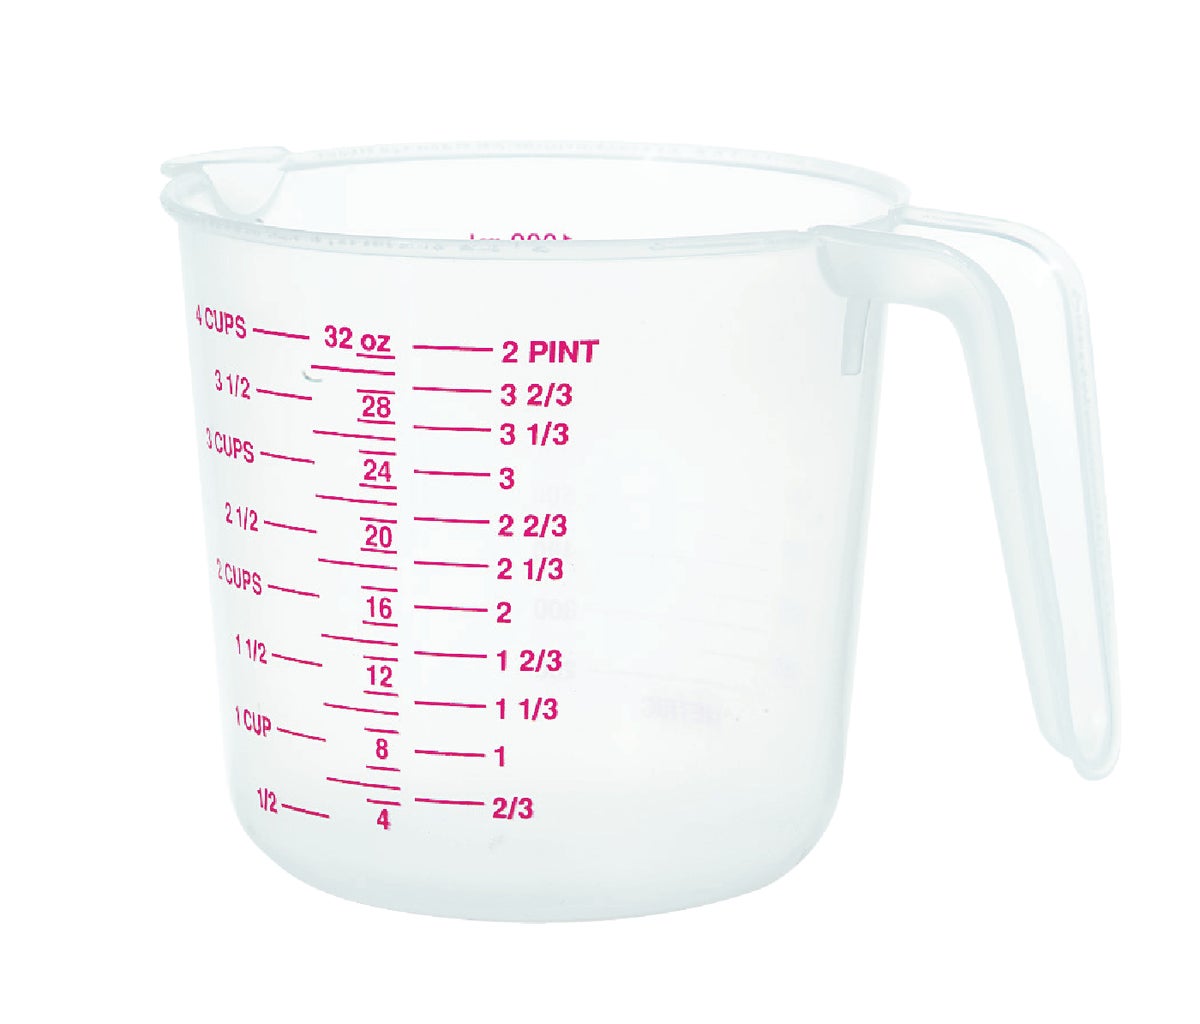 Fertilome Measuring Cup (4 oz) Set of 2